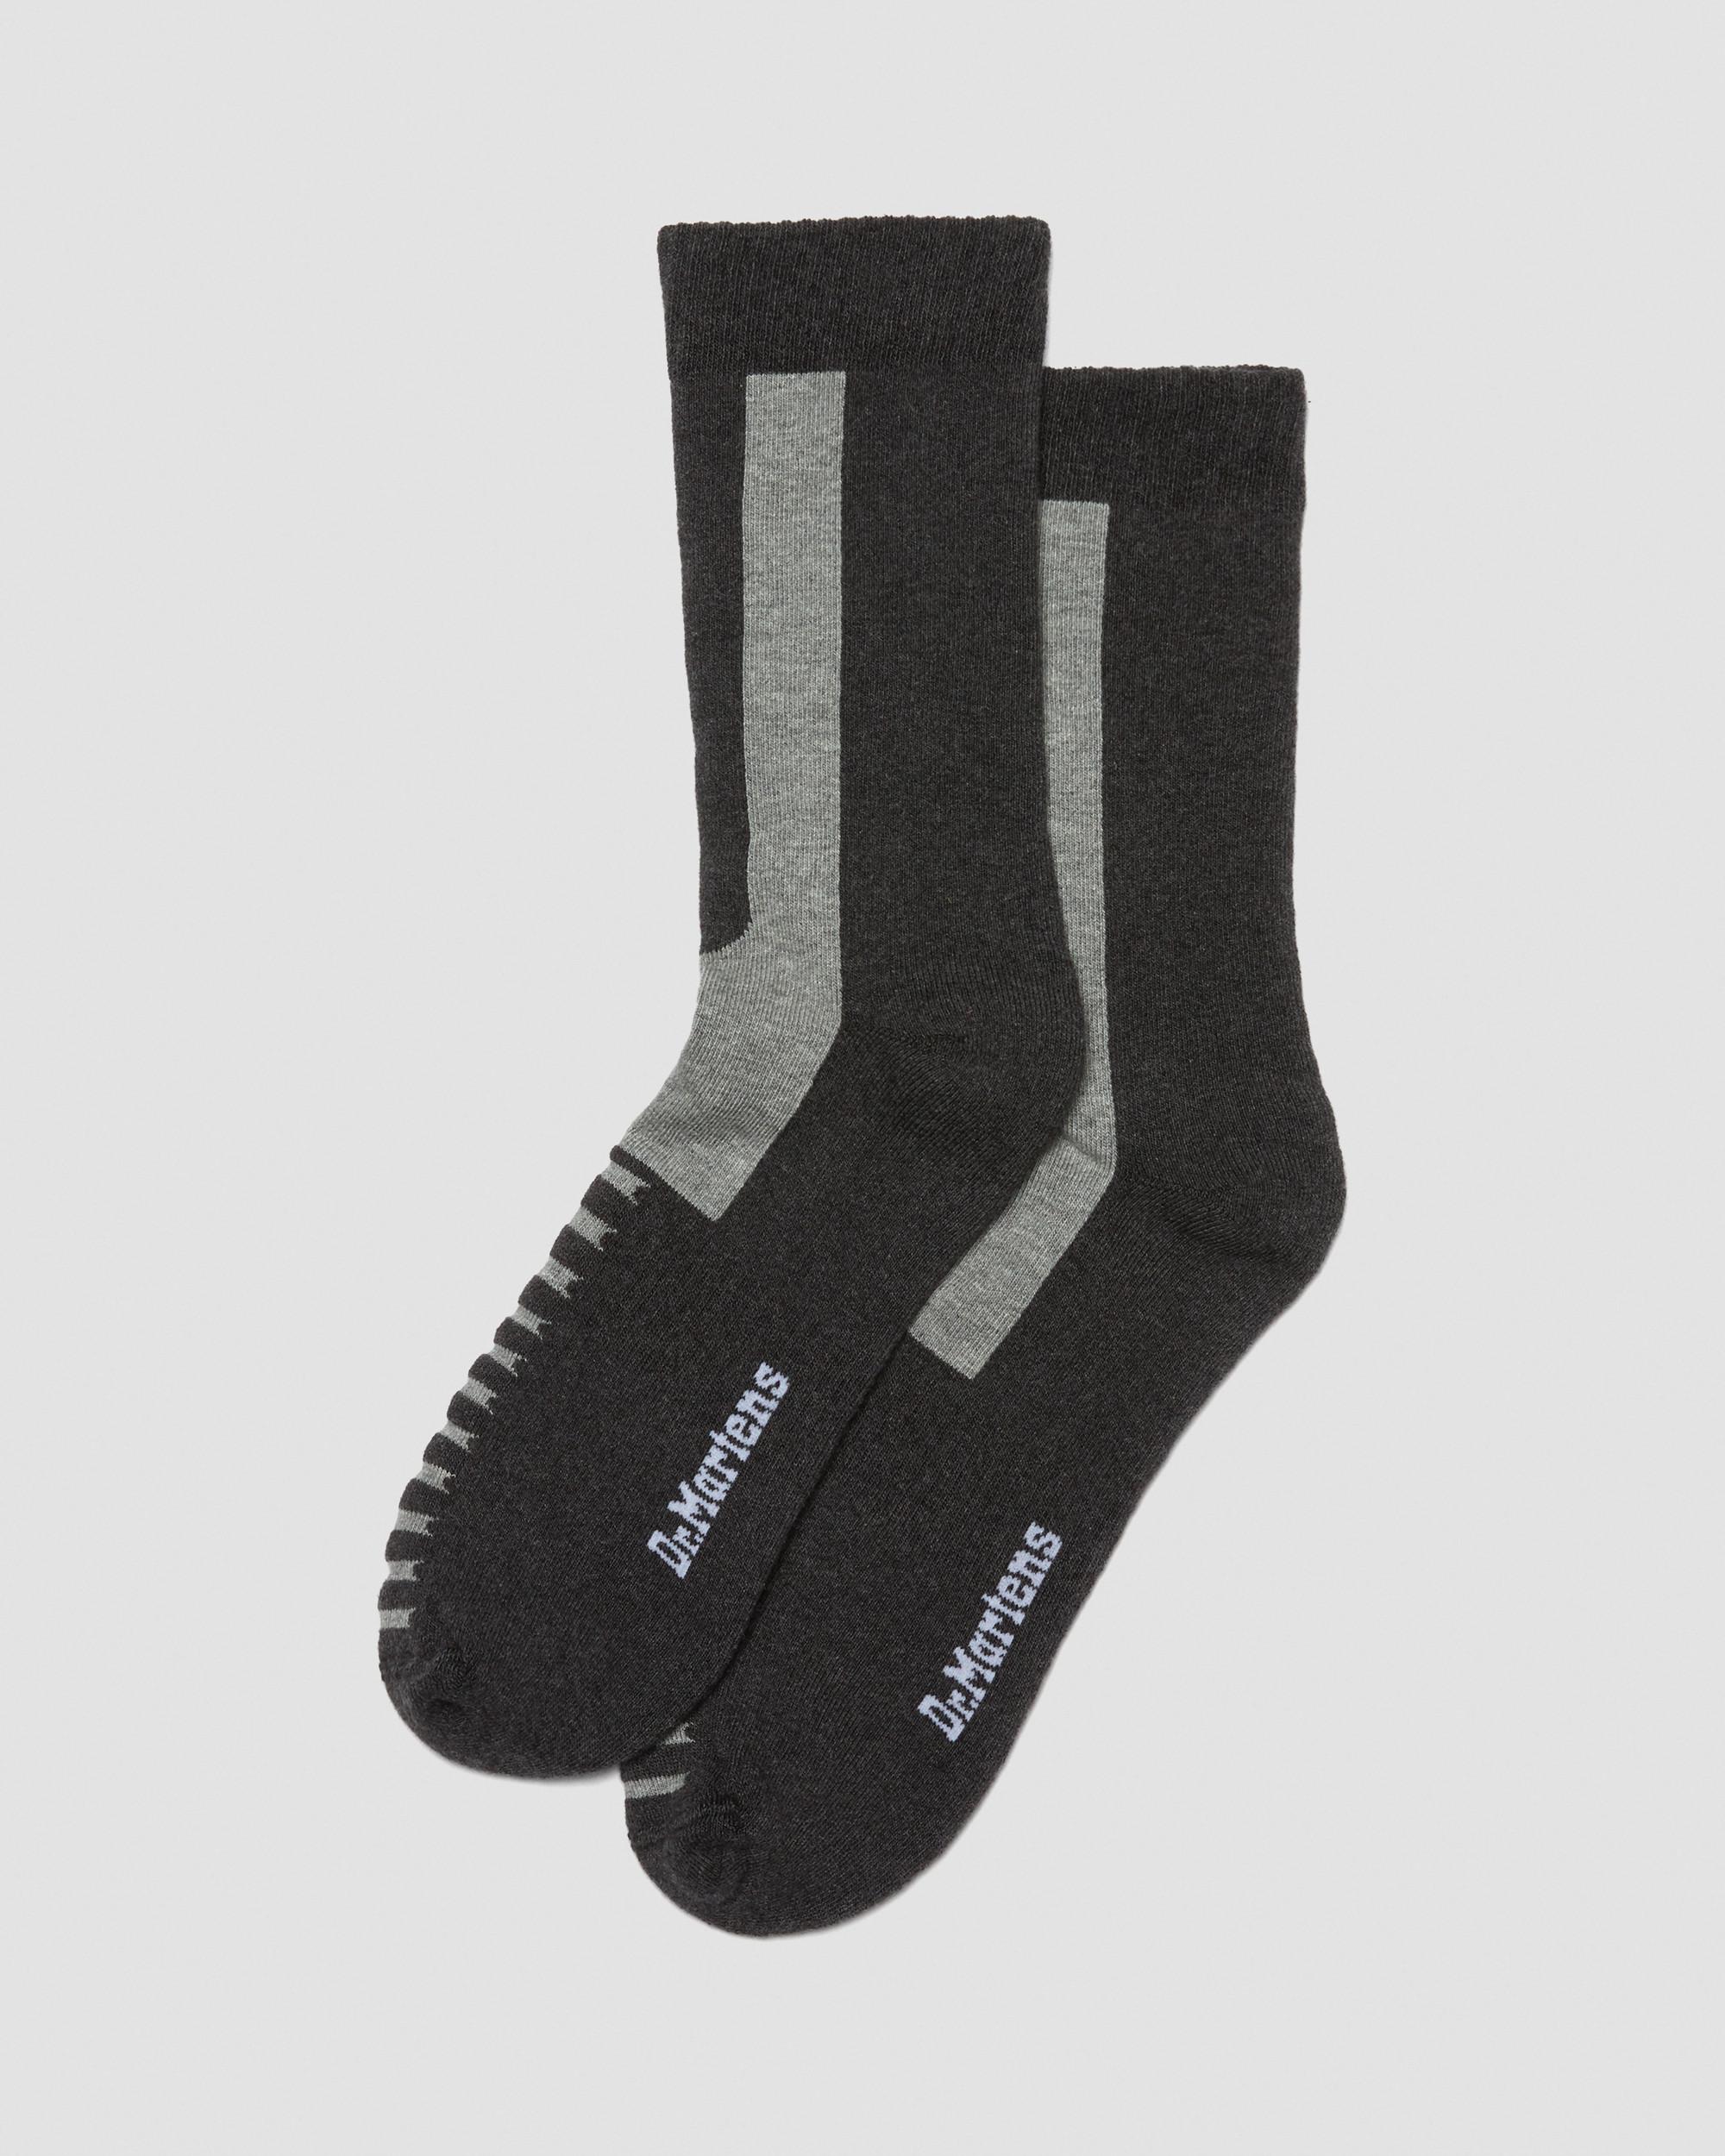 Double Doc Cotton Blend Socks in Black